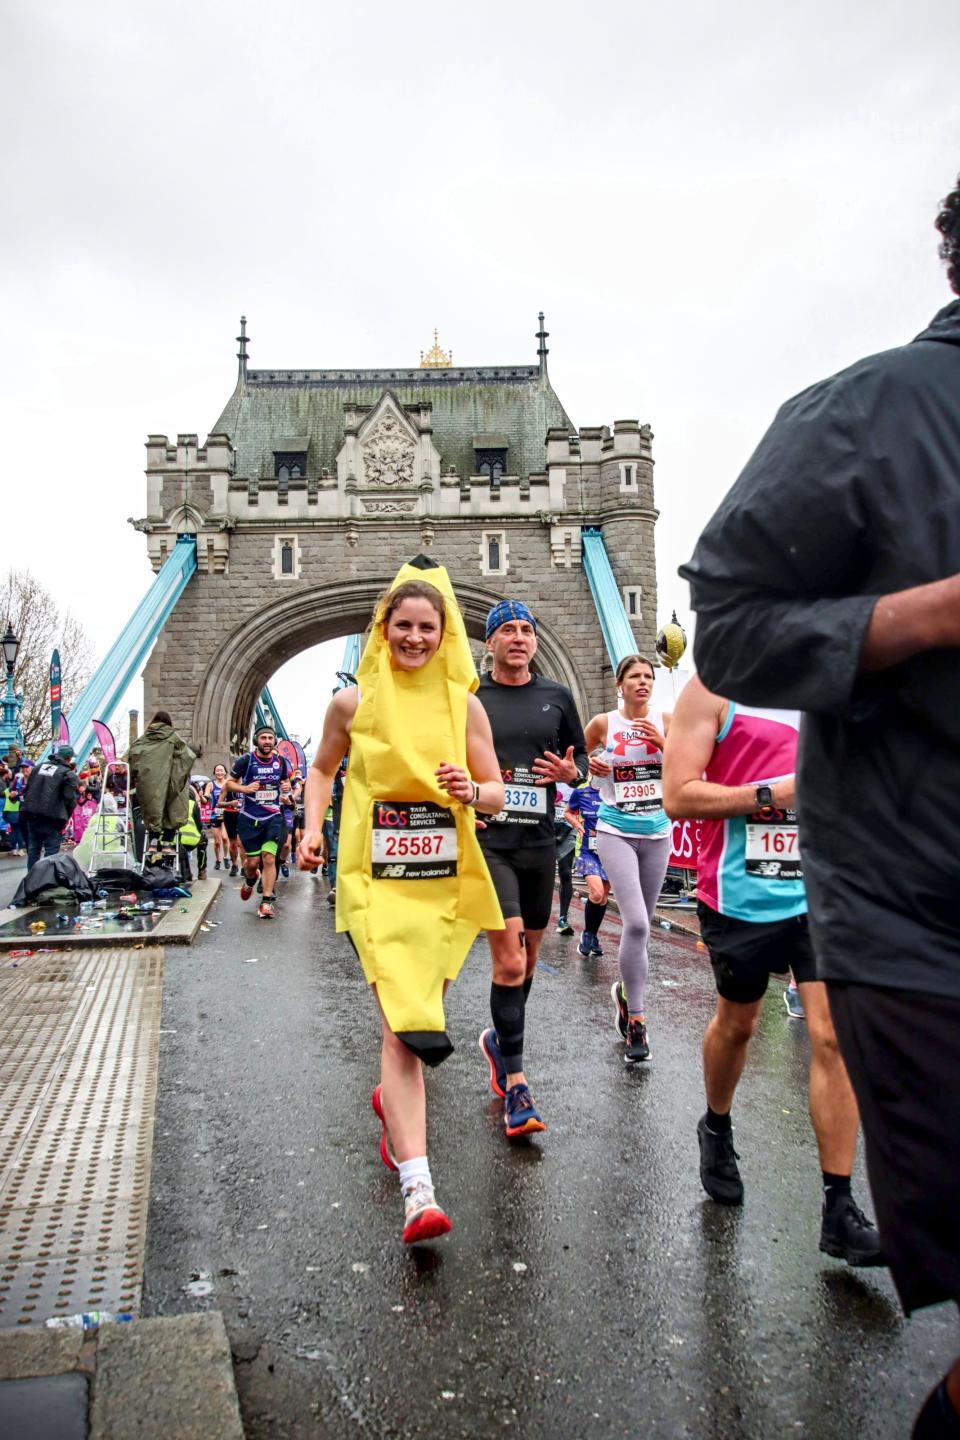 Last year Ali Walsh ran the London Marathon dressed as a banana fundraising for coeliac disease. (Supplied)